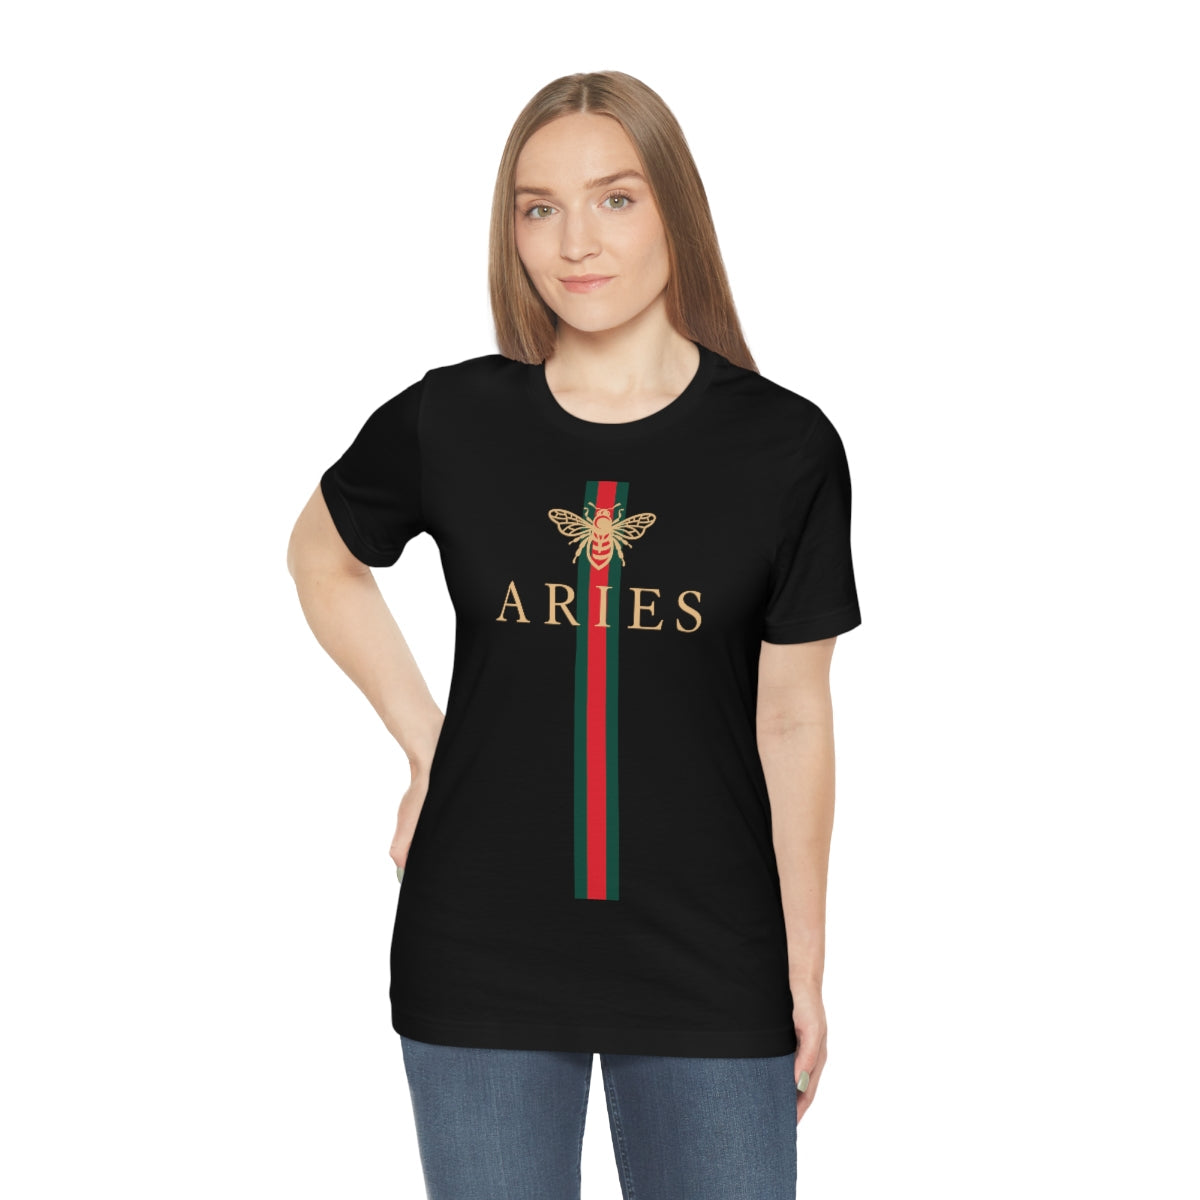 Aries Bee Girl Shirt